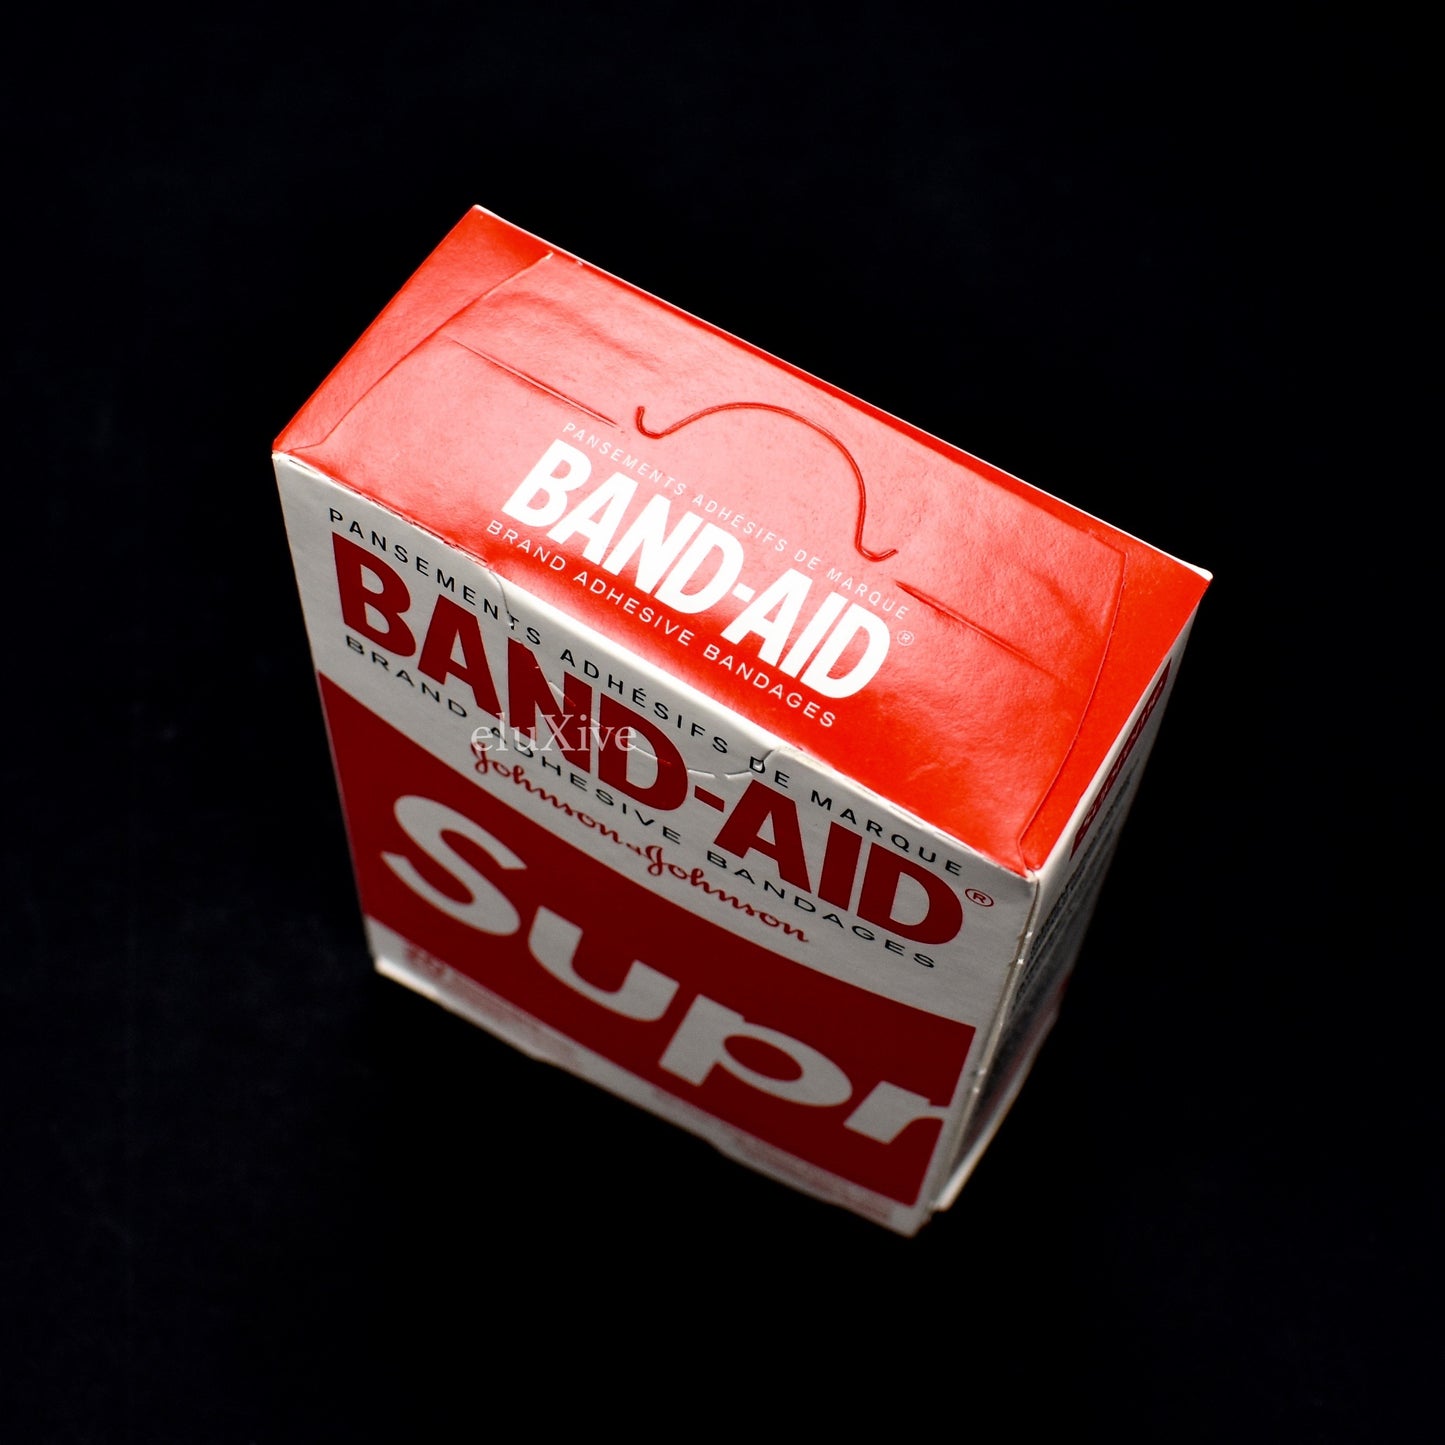 Supreme x Band-Aid - Red Box Logo Bandages